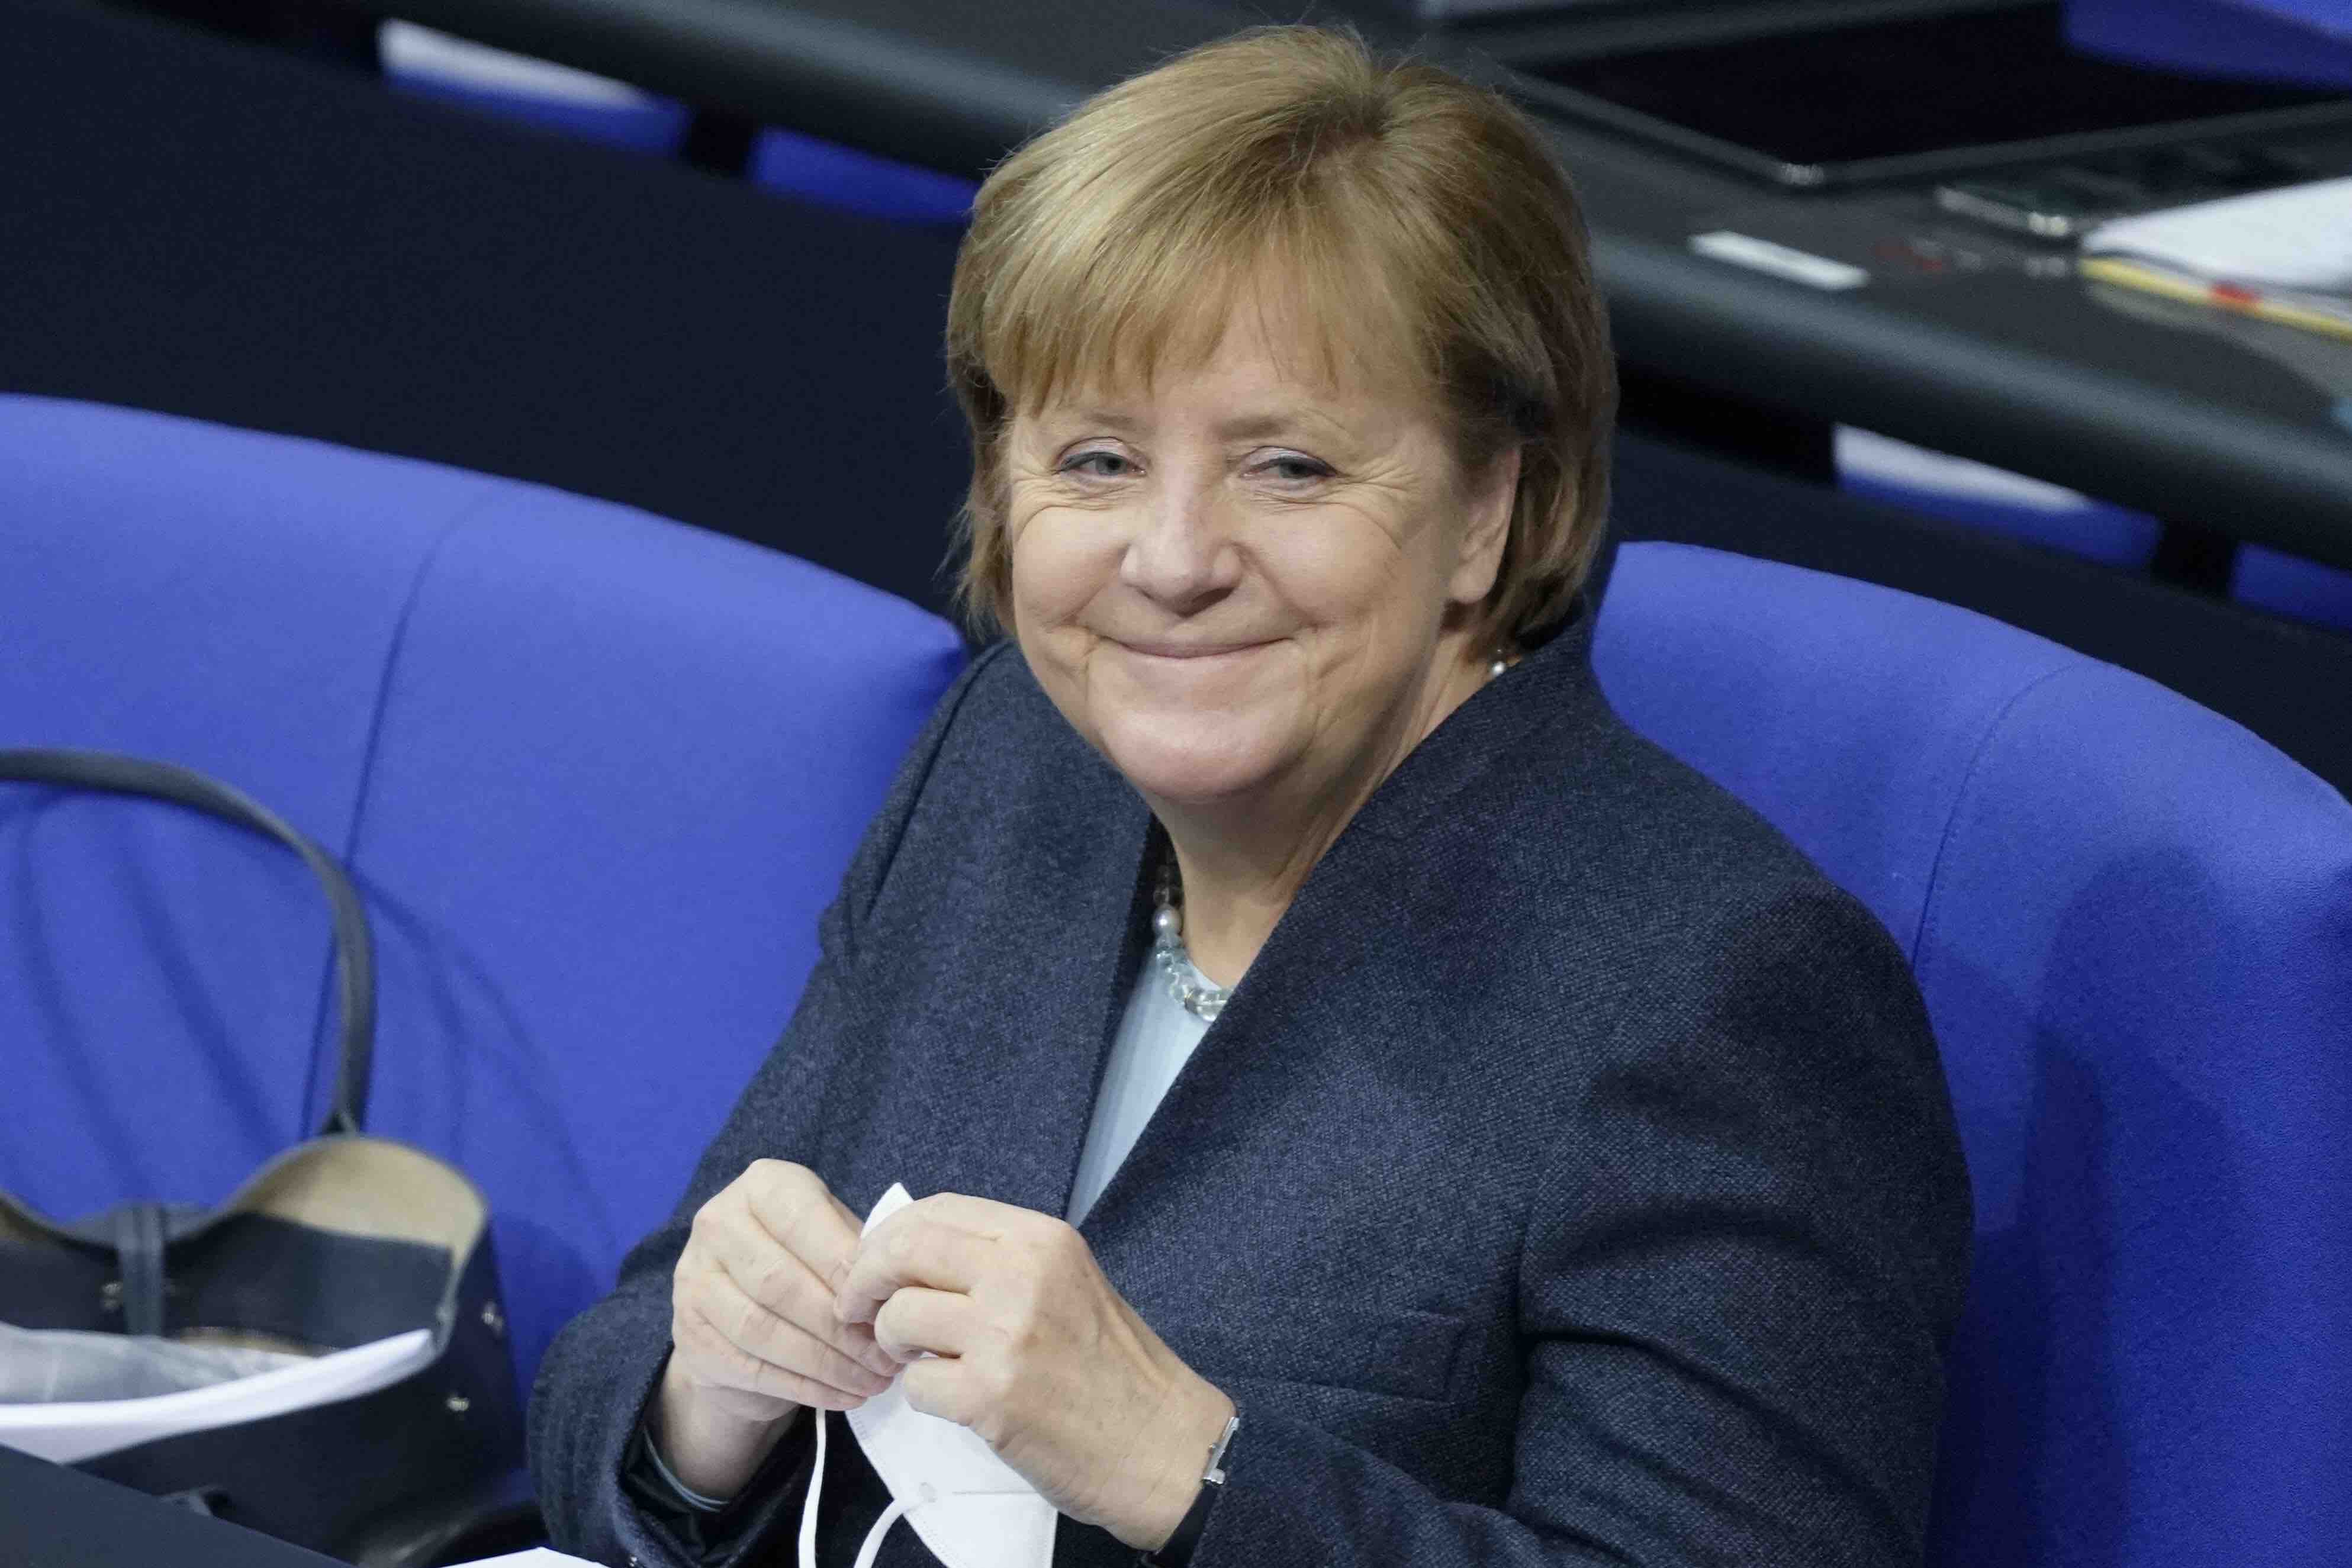 20201221-image-imago-mb-Merkel